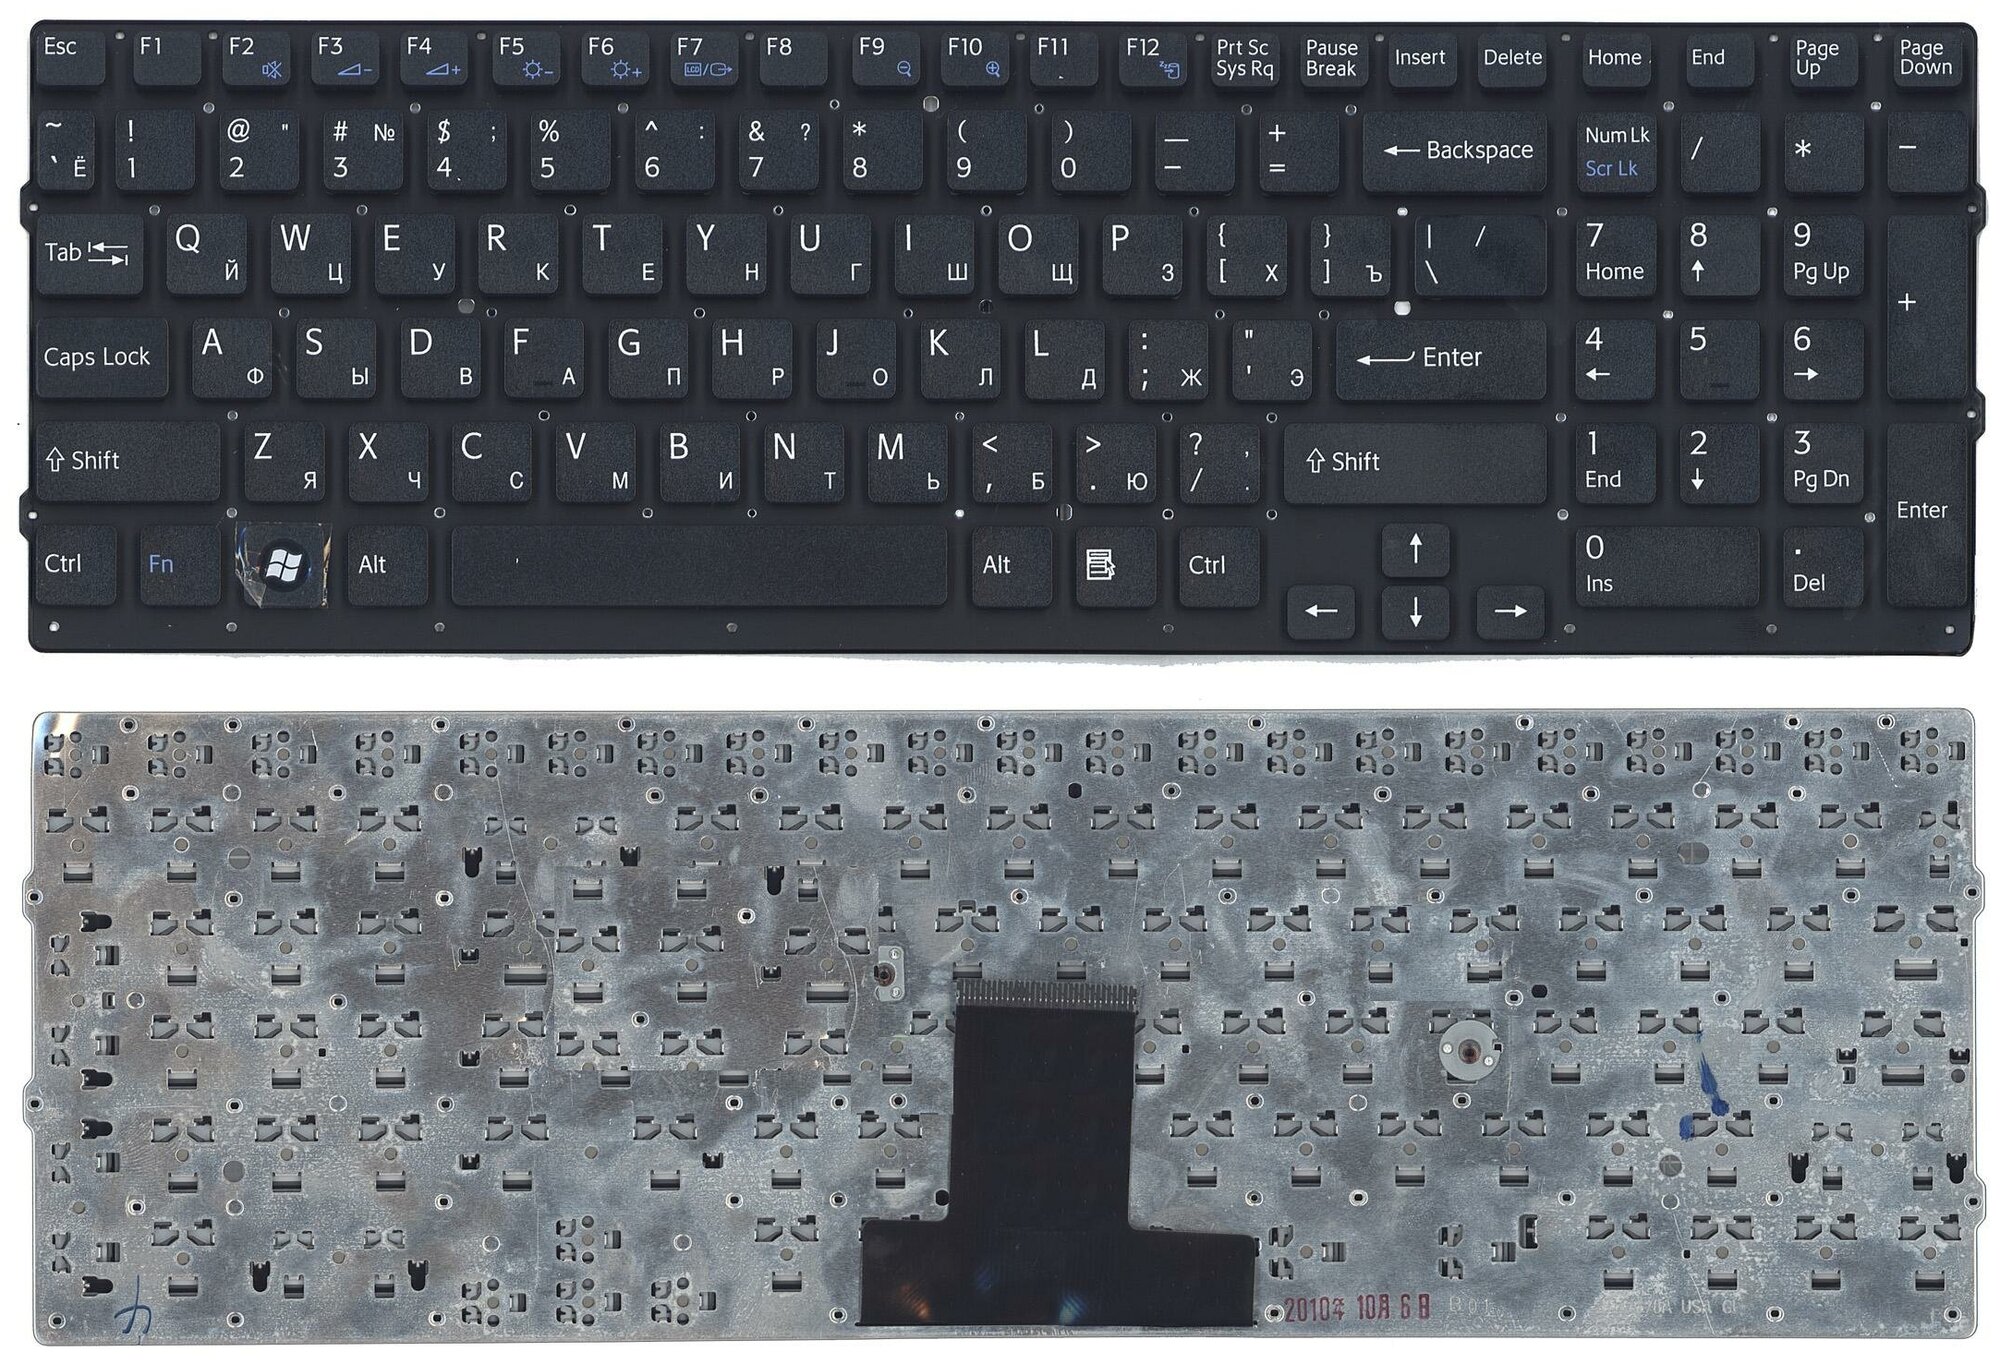 Клавиатура для ноутбука Sony Vaio VPC-EB черная без рамки